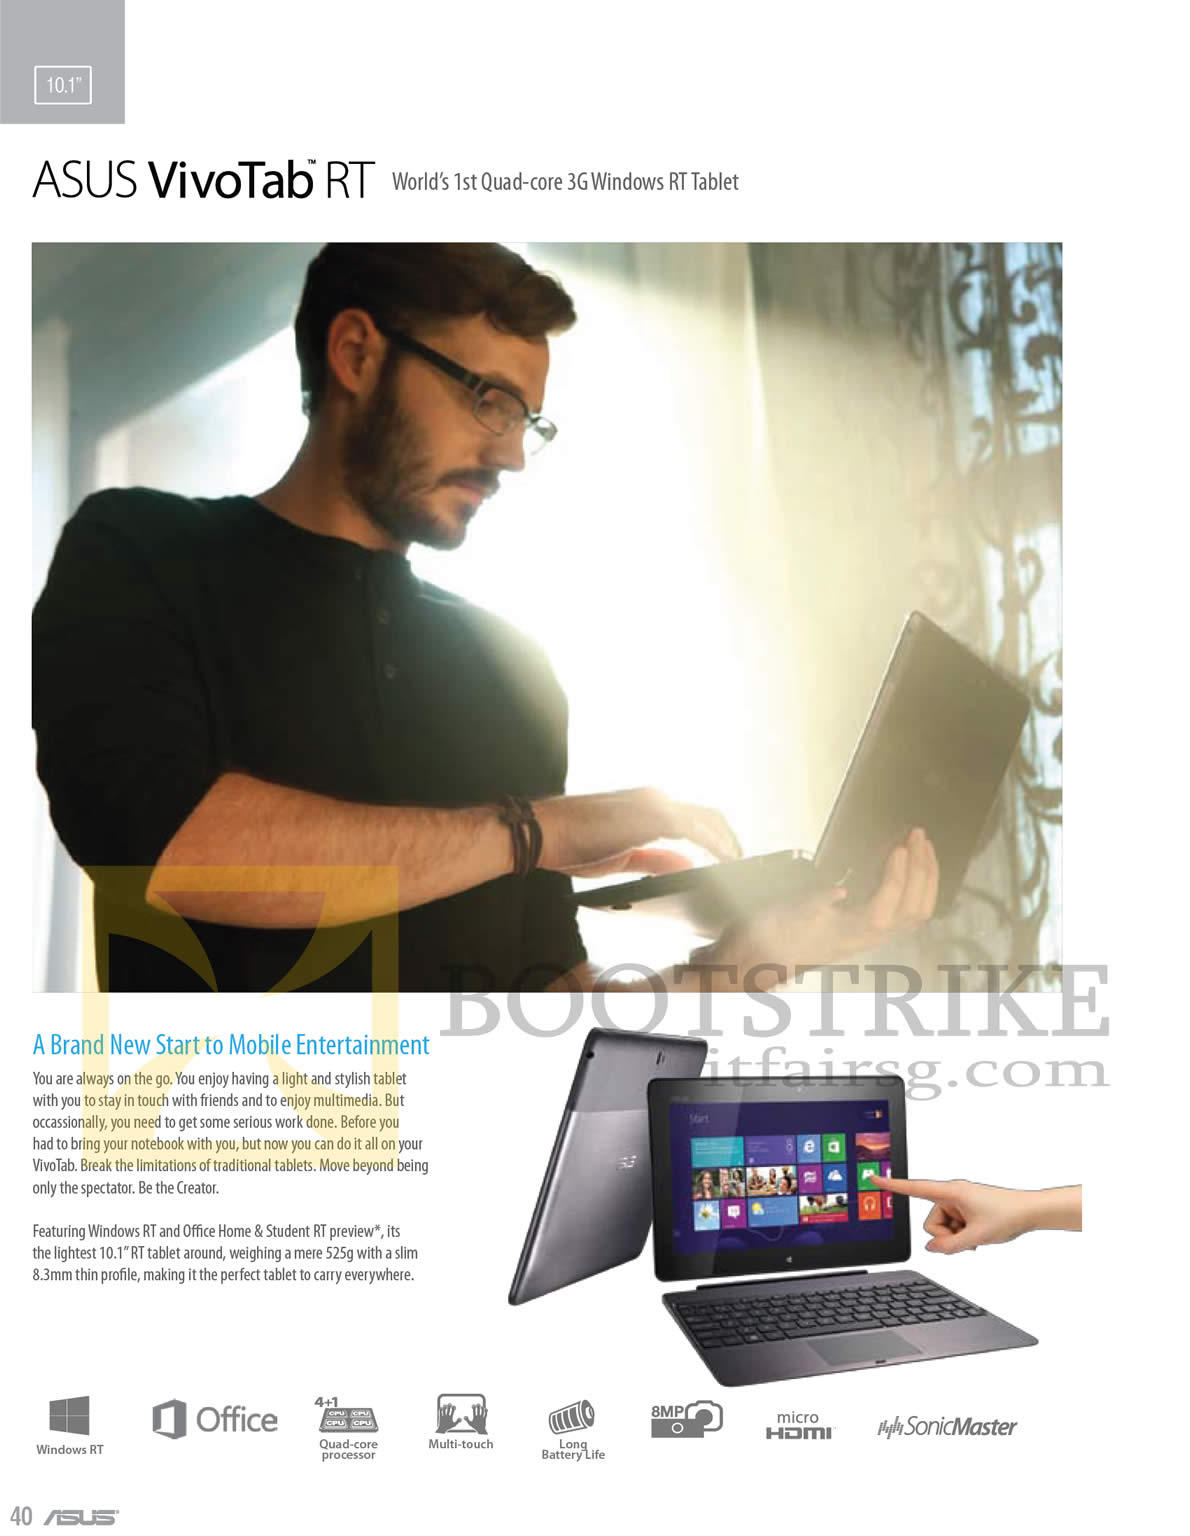 PC SHOW 2013 price list image brochure of ASUS Tablets VivoTab RT 3G Tablet